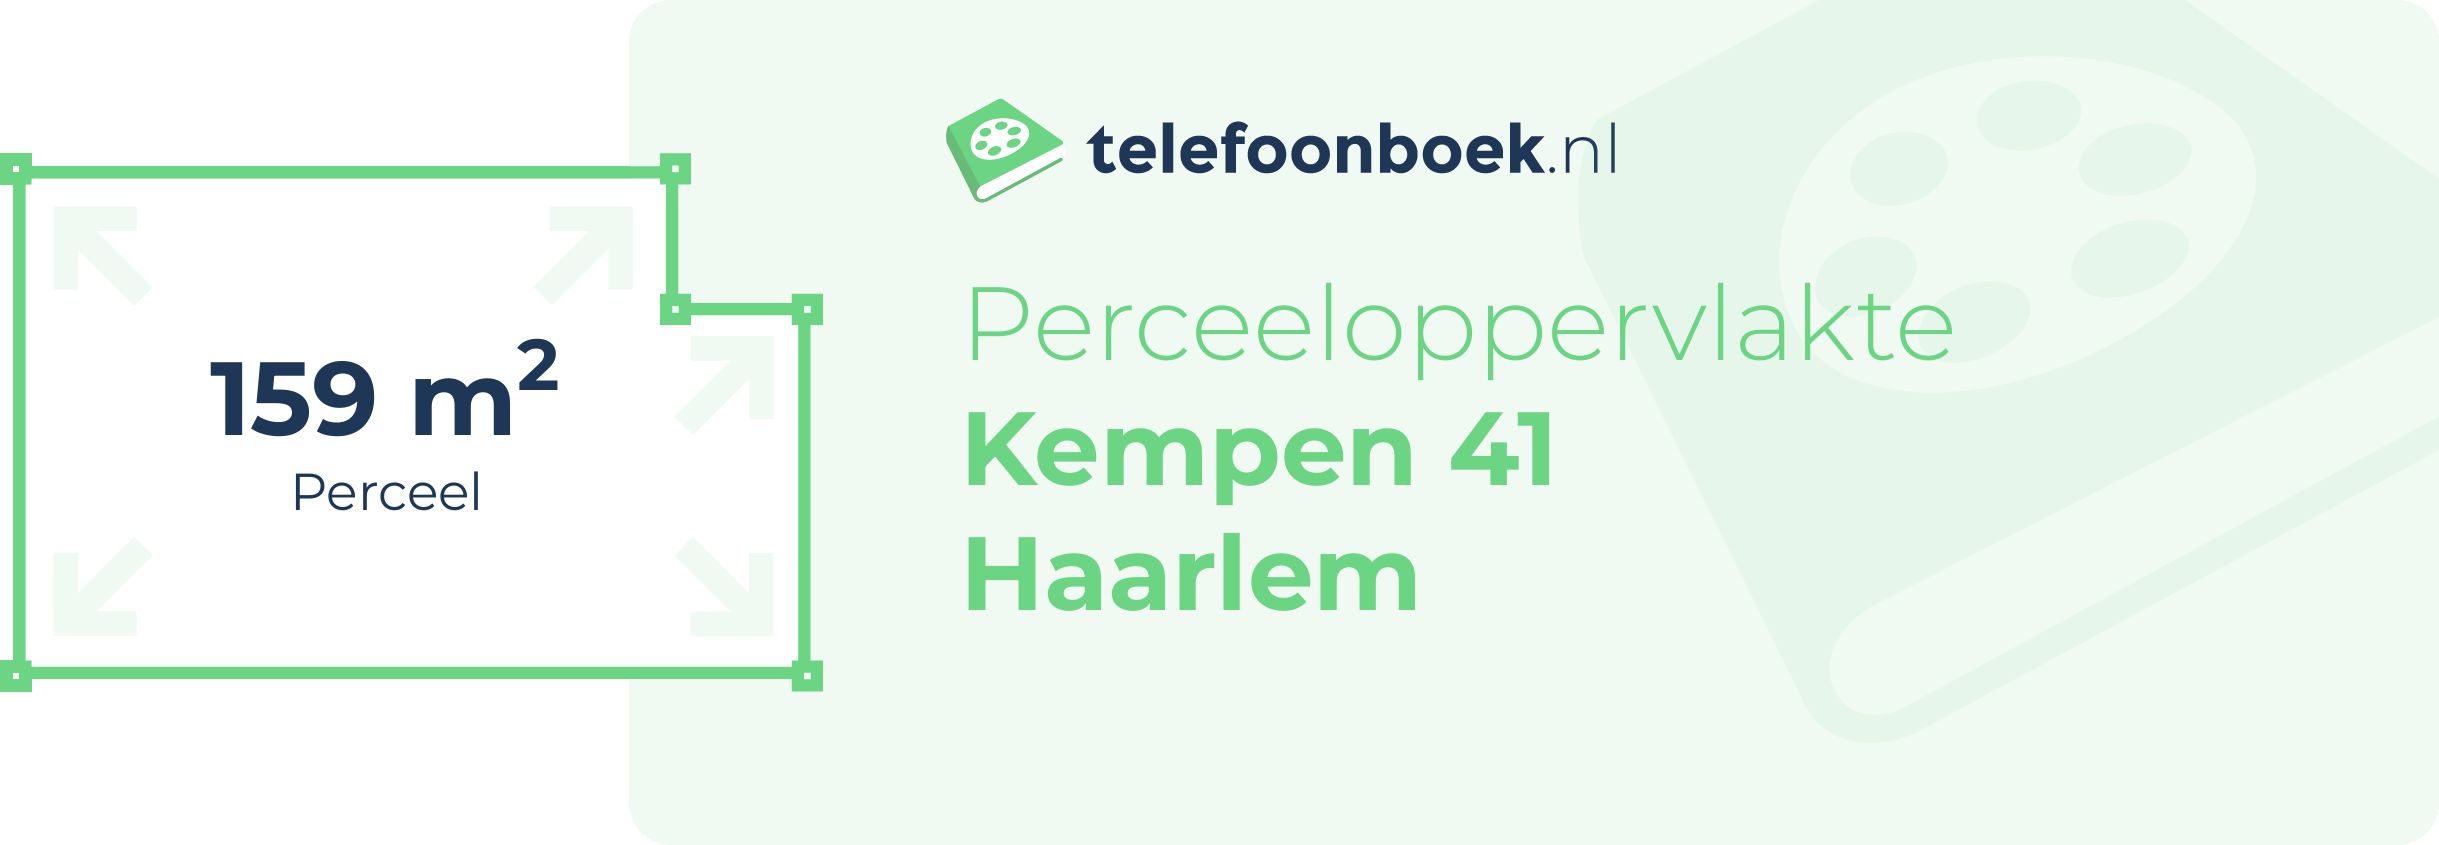 Perceeloppervlakte Kempen 41 Haarlem